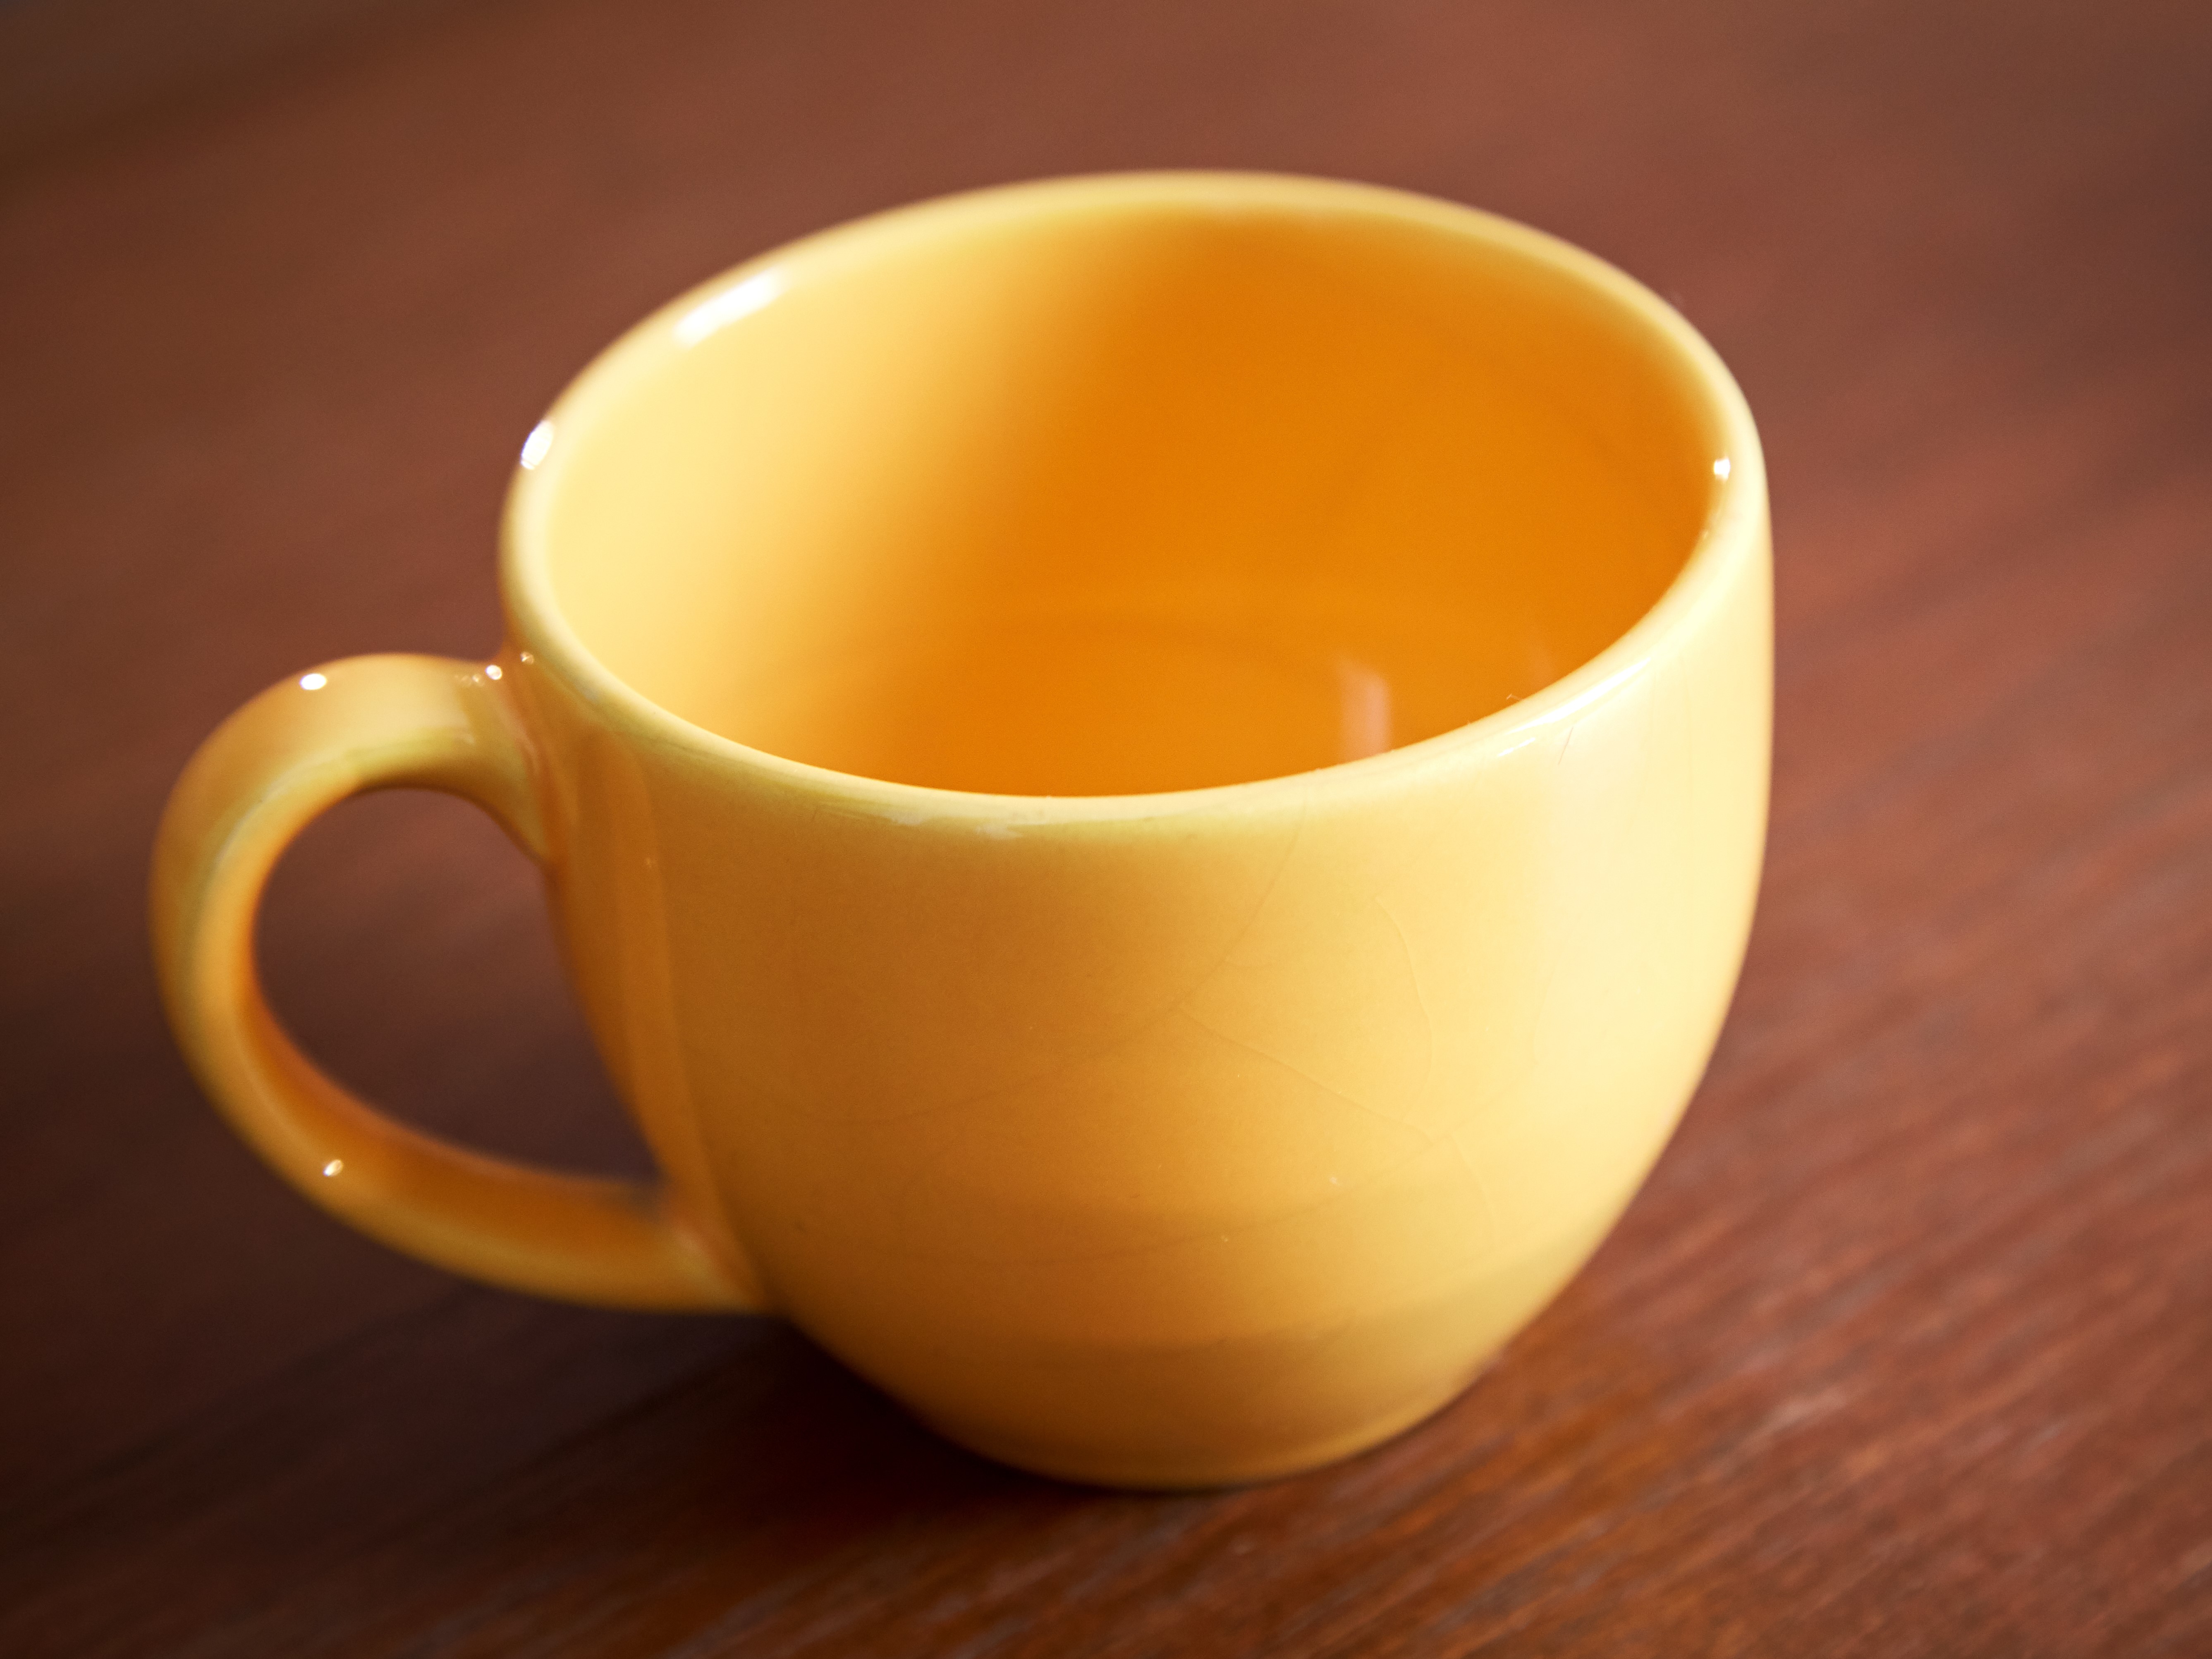 yellow ceramic mug on wooden table